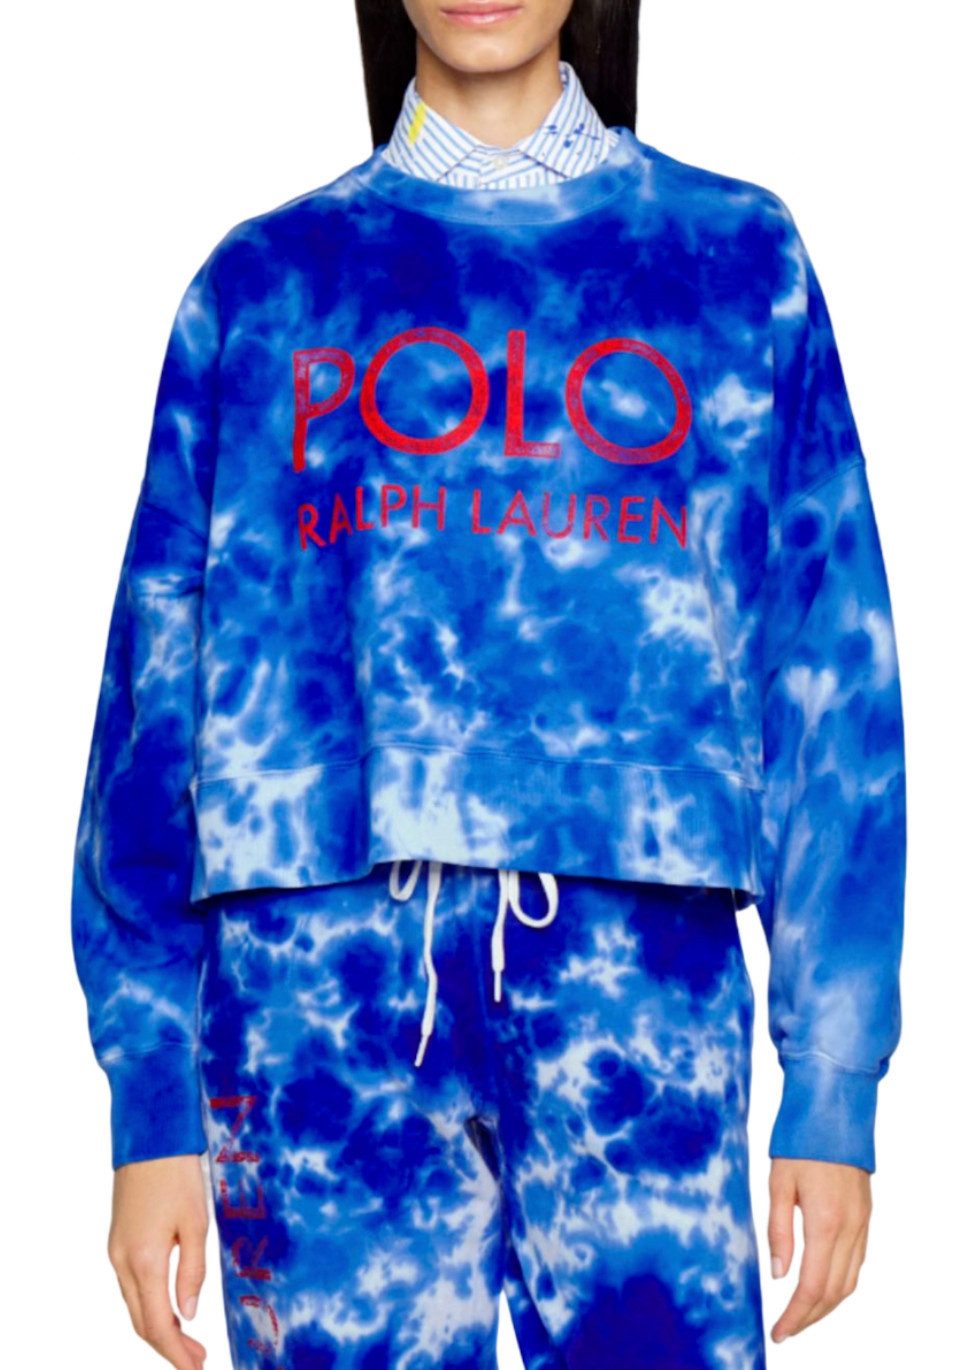 Polo Ralph Lauren Sweatshirt Sweatshirt Cropped Sweater French Terry Batik Jumper Pullover Pulli Cropped Batik